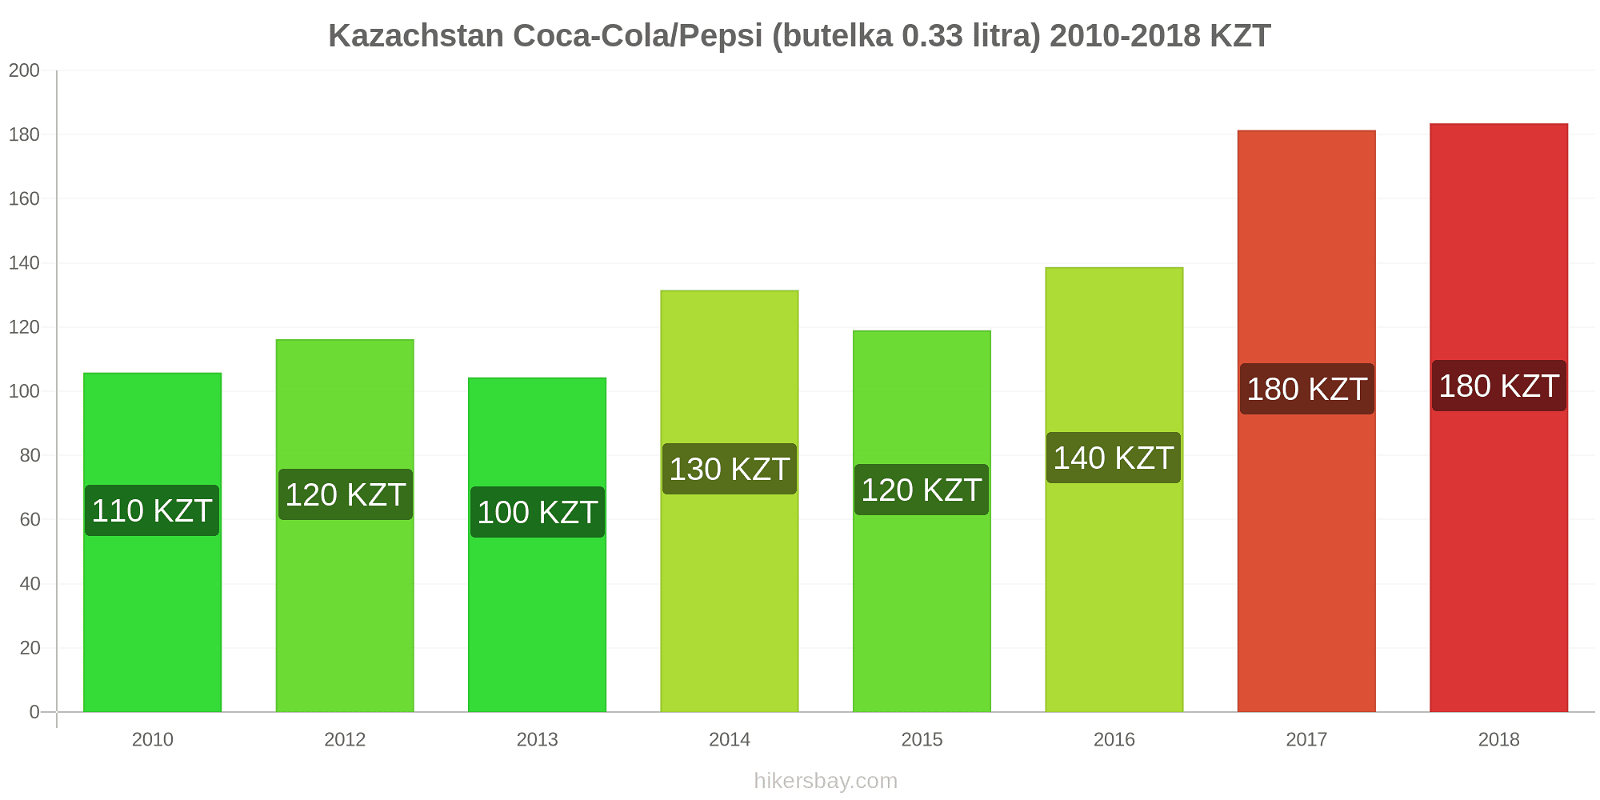 Kazachstan zmiany cen Coca-Cola/Pepsi (butelka 0.33 litra) hikersbay.com